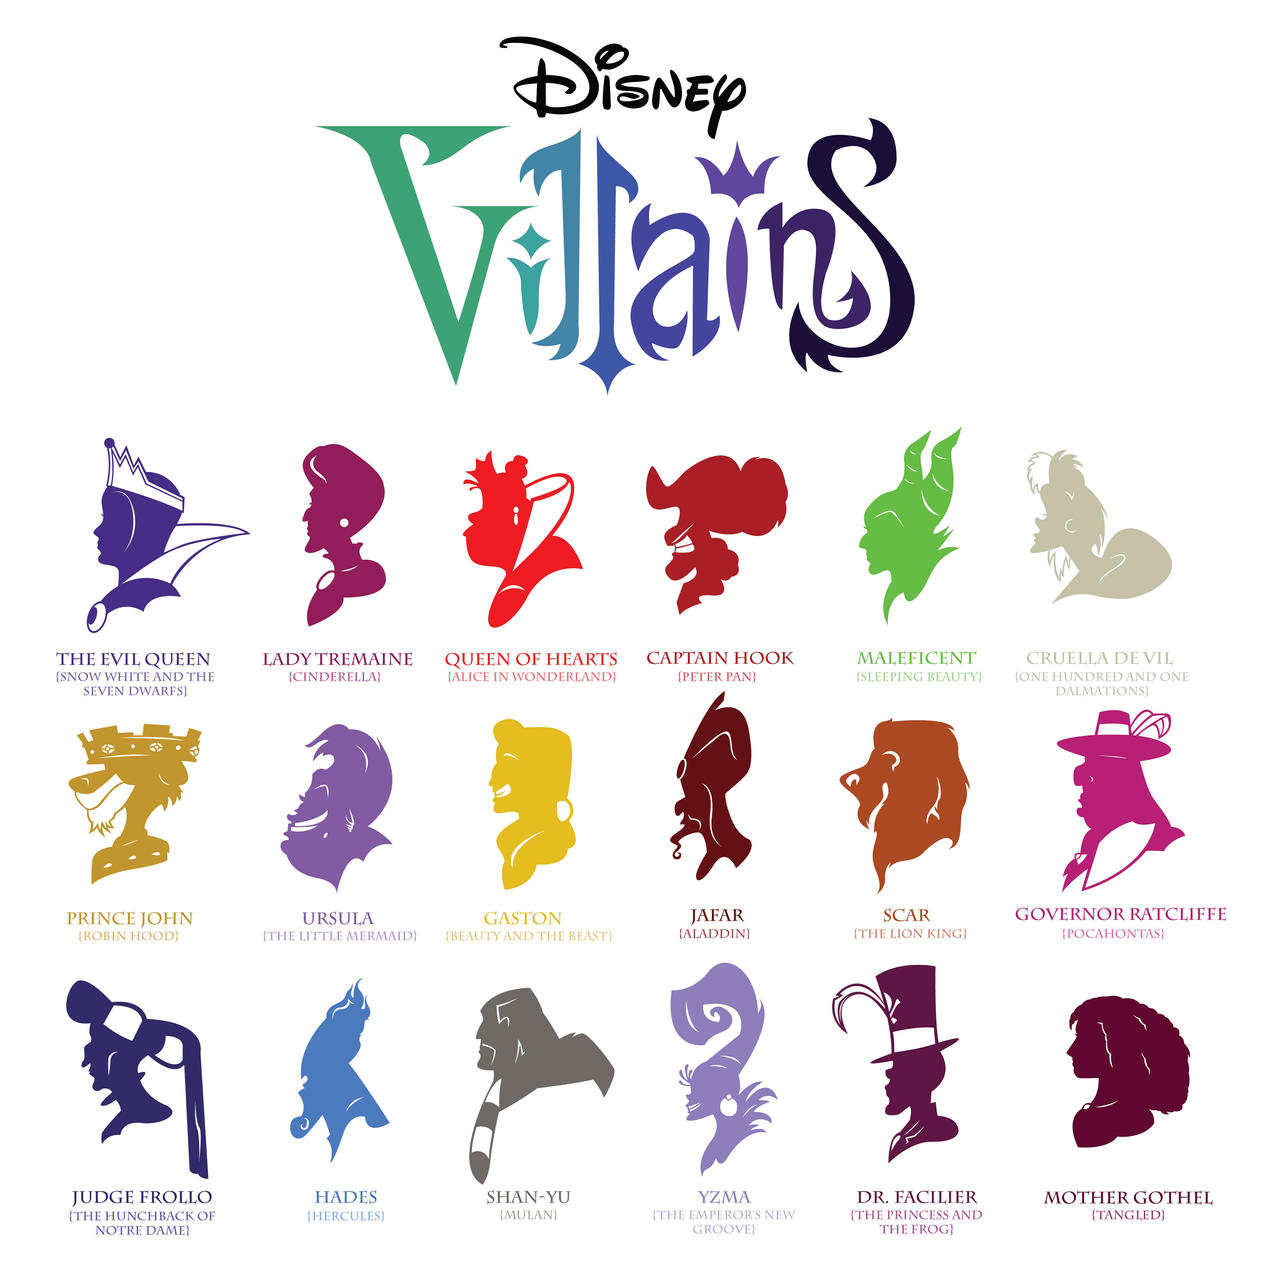 Disney Villains by Zactopus on DeviantArt